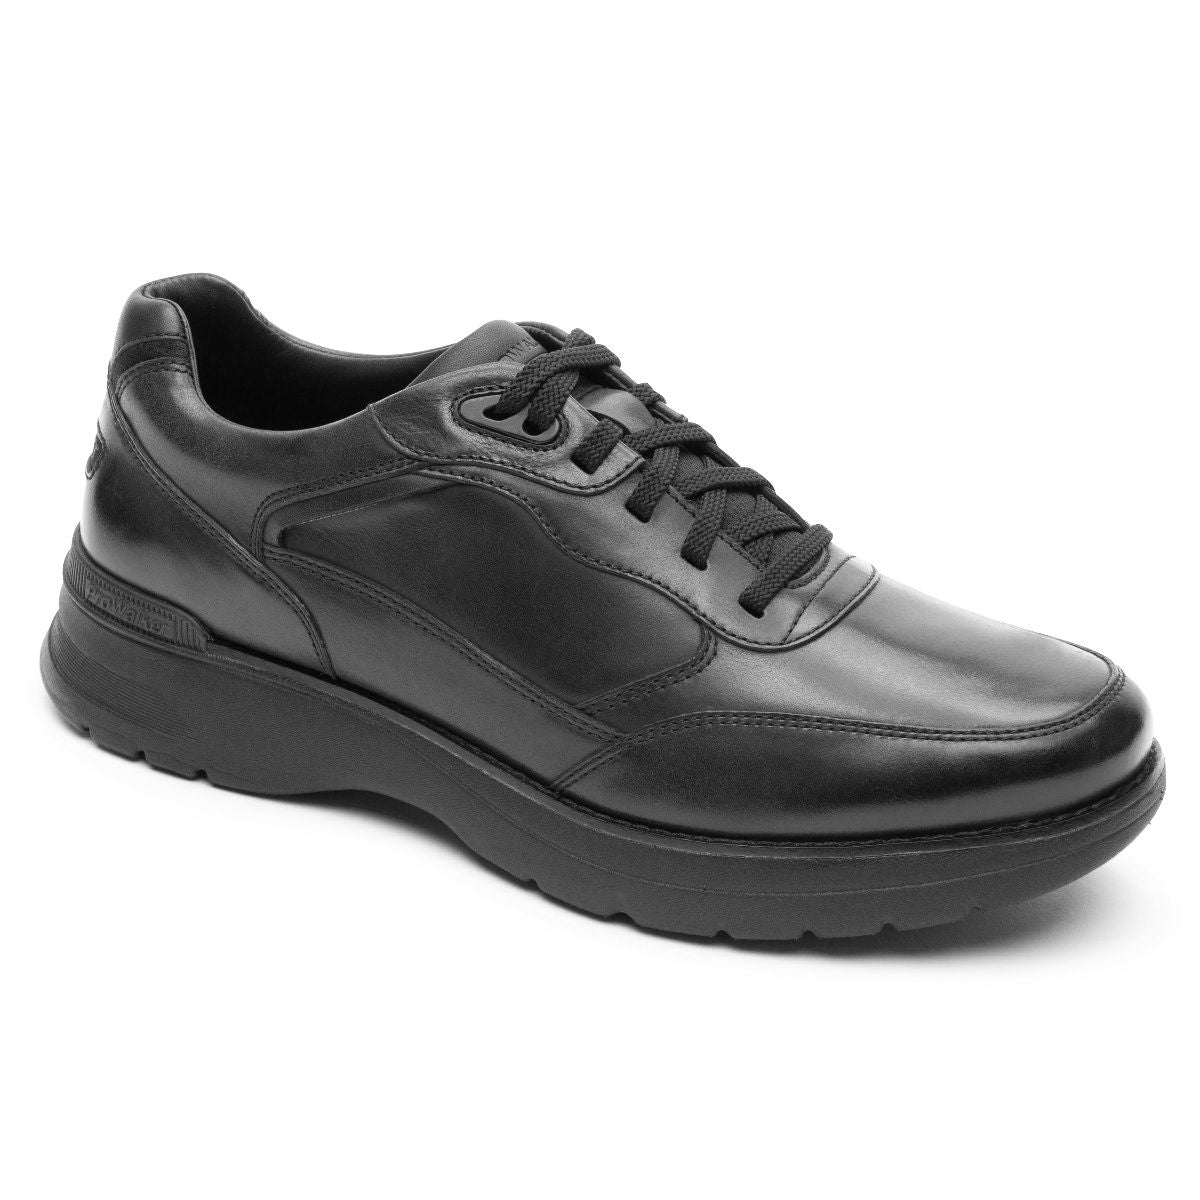 Rockport Prowalker NEXT UBal Black נעלי גברים רוקפורט